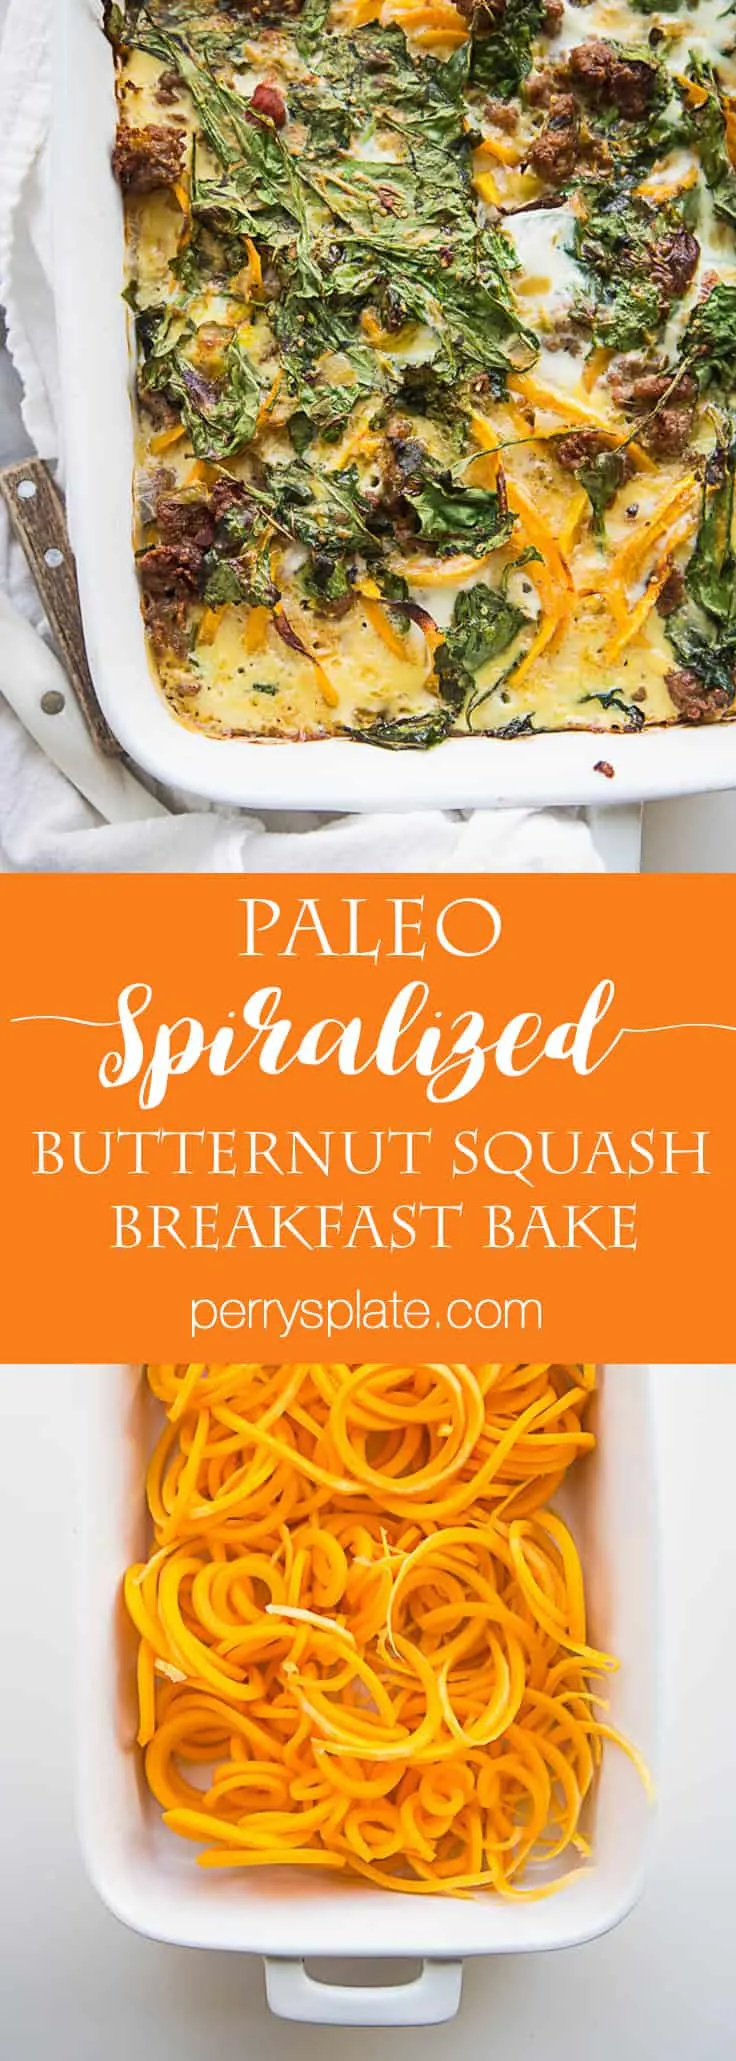 Spiralized Butternut Squash Breakfast Bake | Paleo recipes | low carb recipes | butternut squash recipes | brunch recipes | gluten-free recipes | dairy free recipes | perrysplate.com